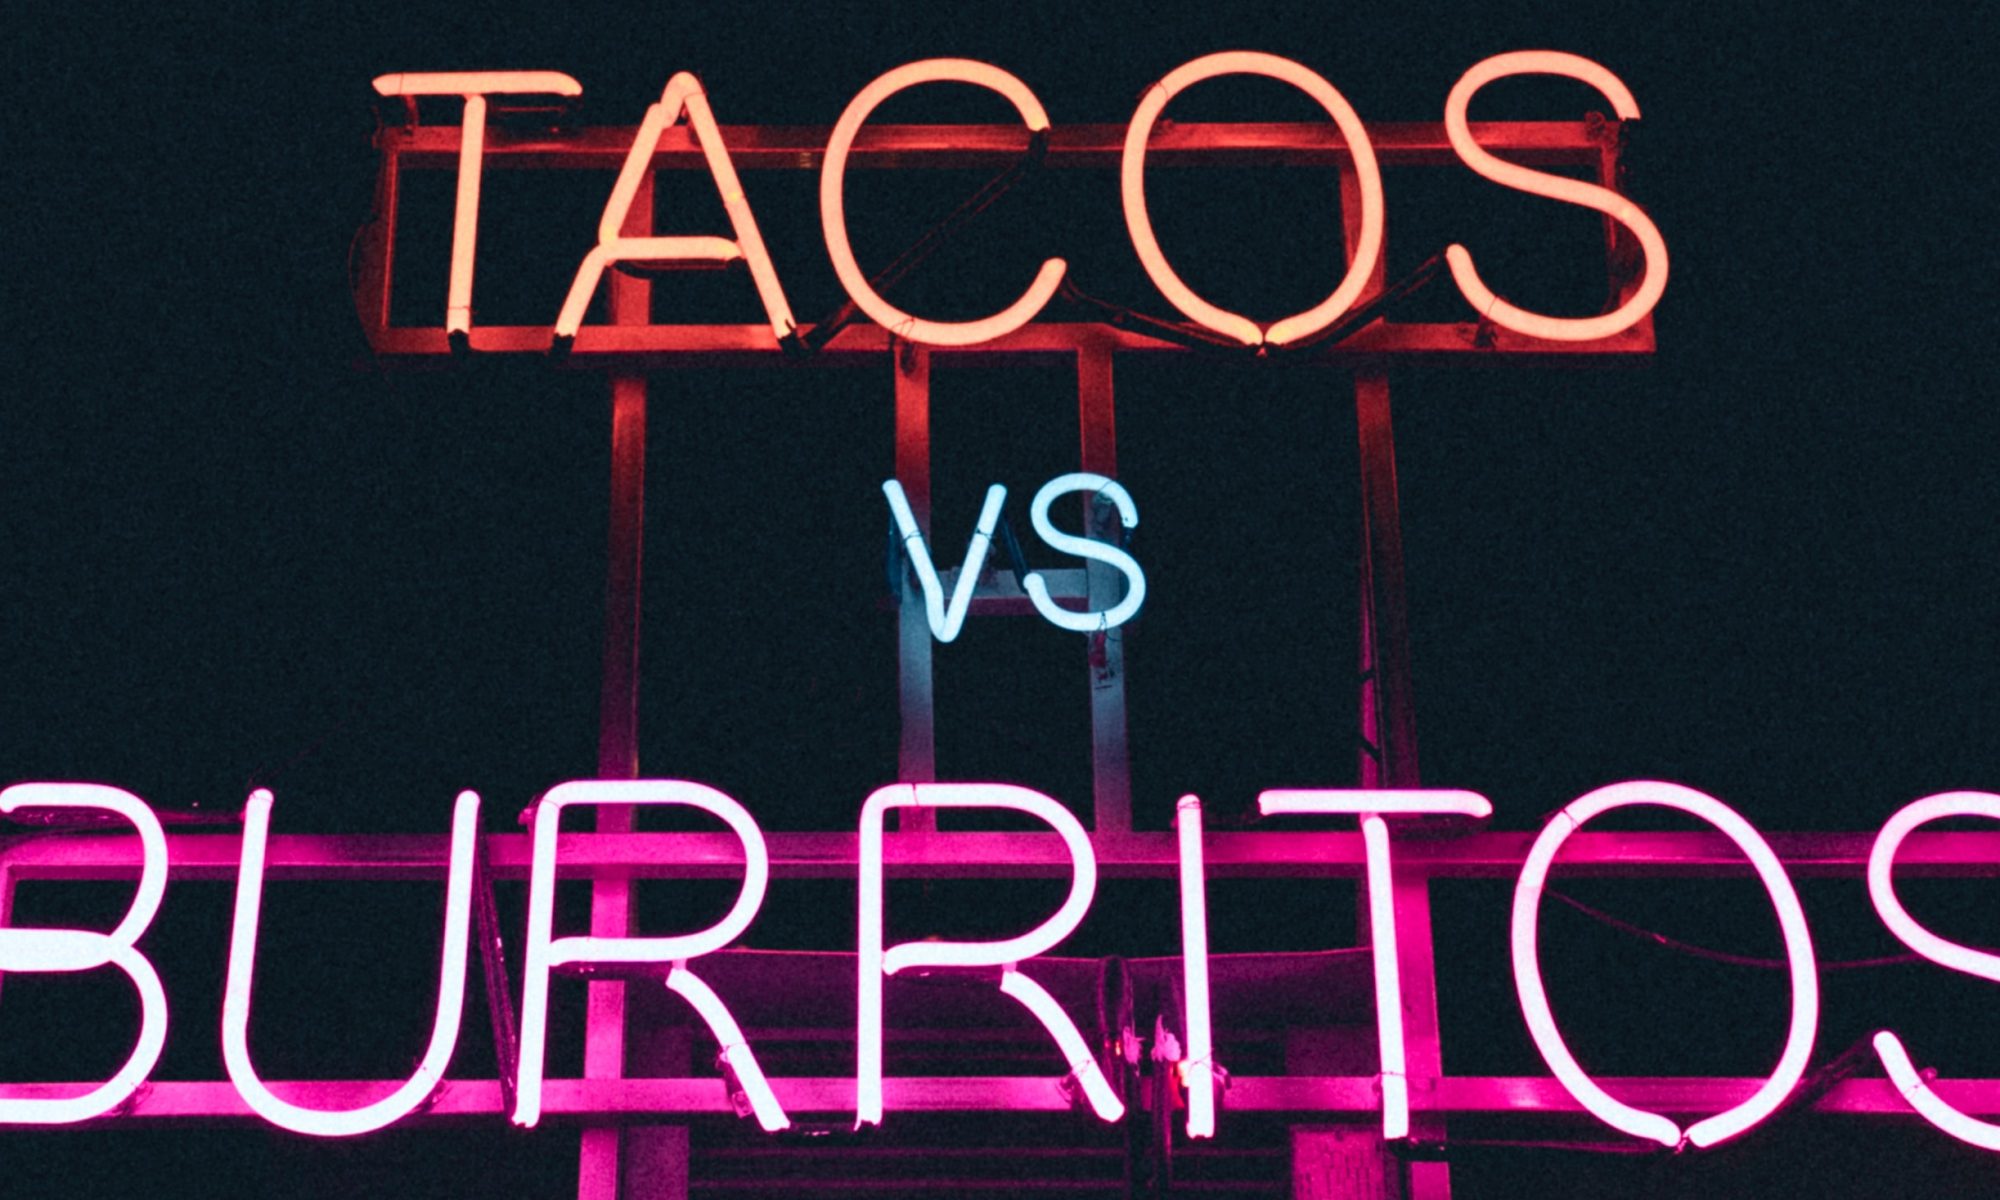 neon-sign-tacos-vs-burritos-matt-nelson-on-unsplash